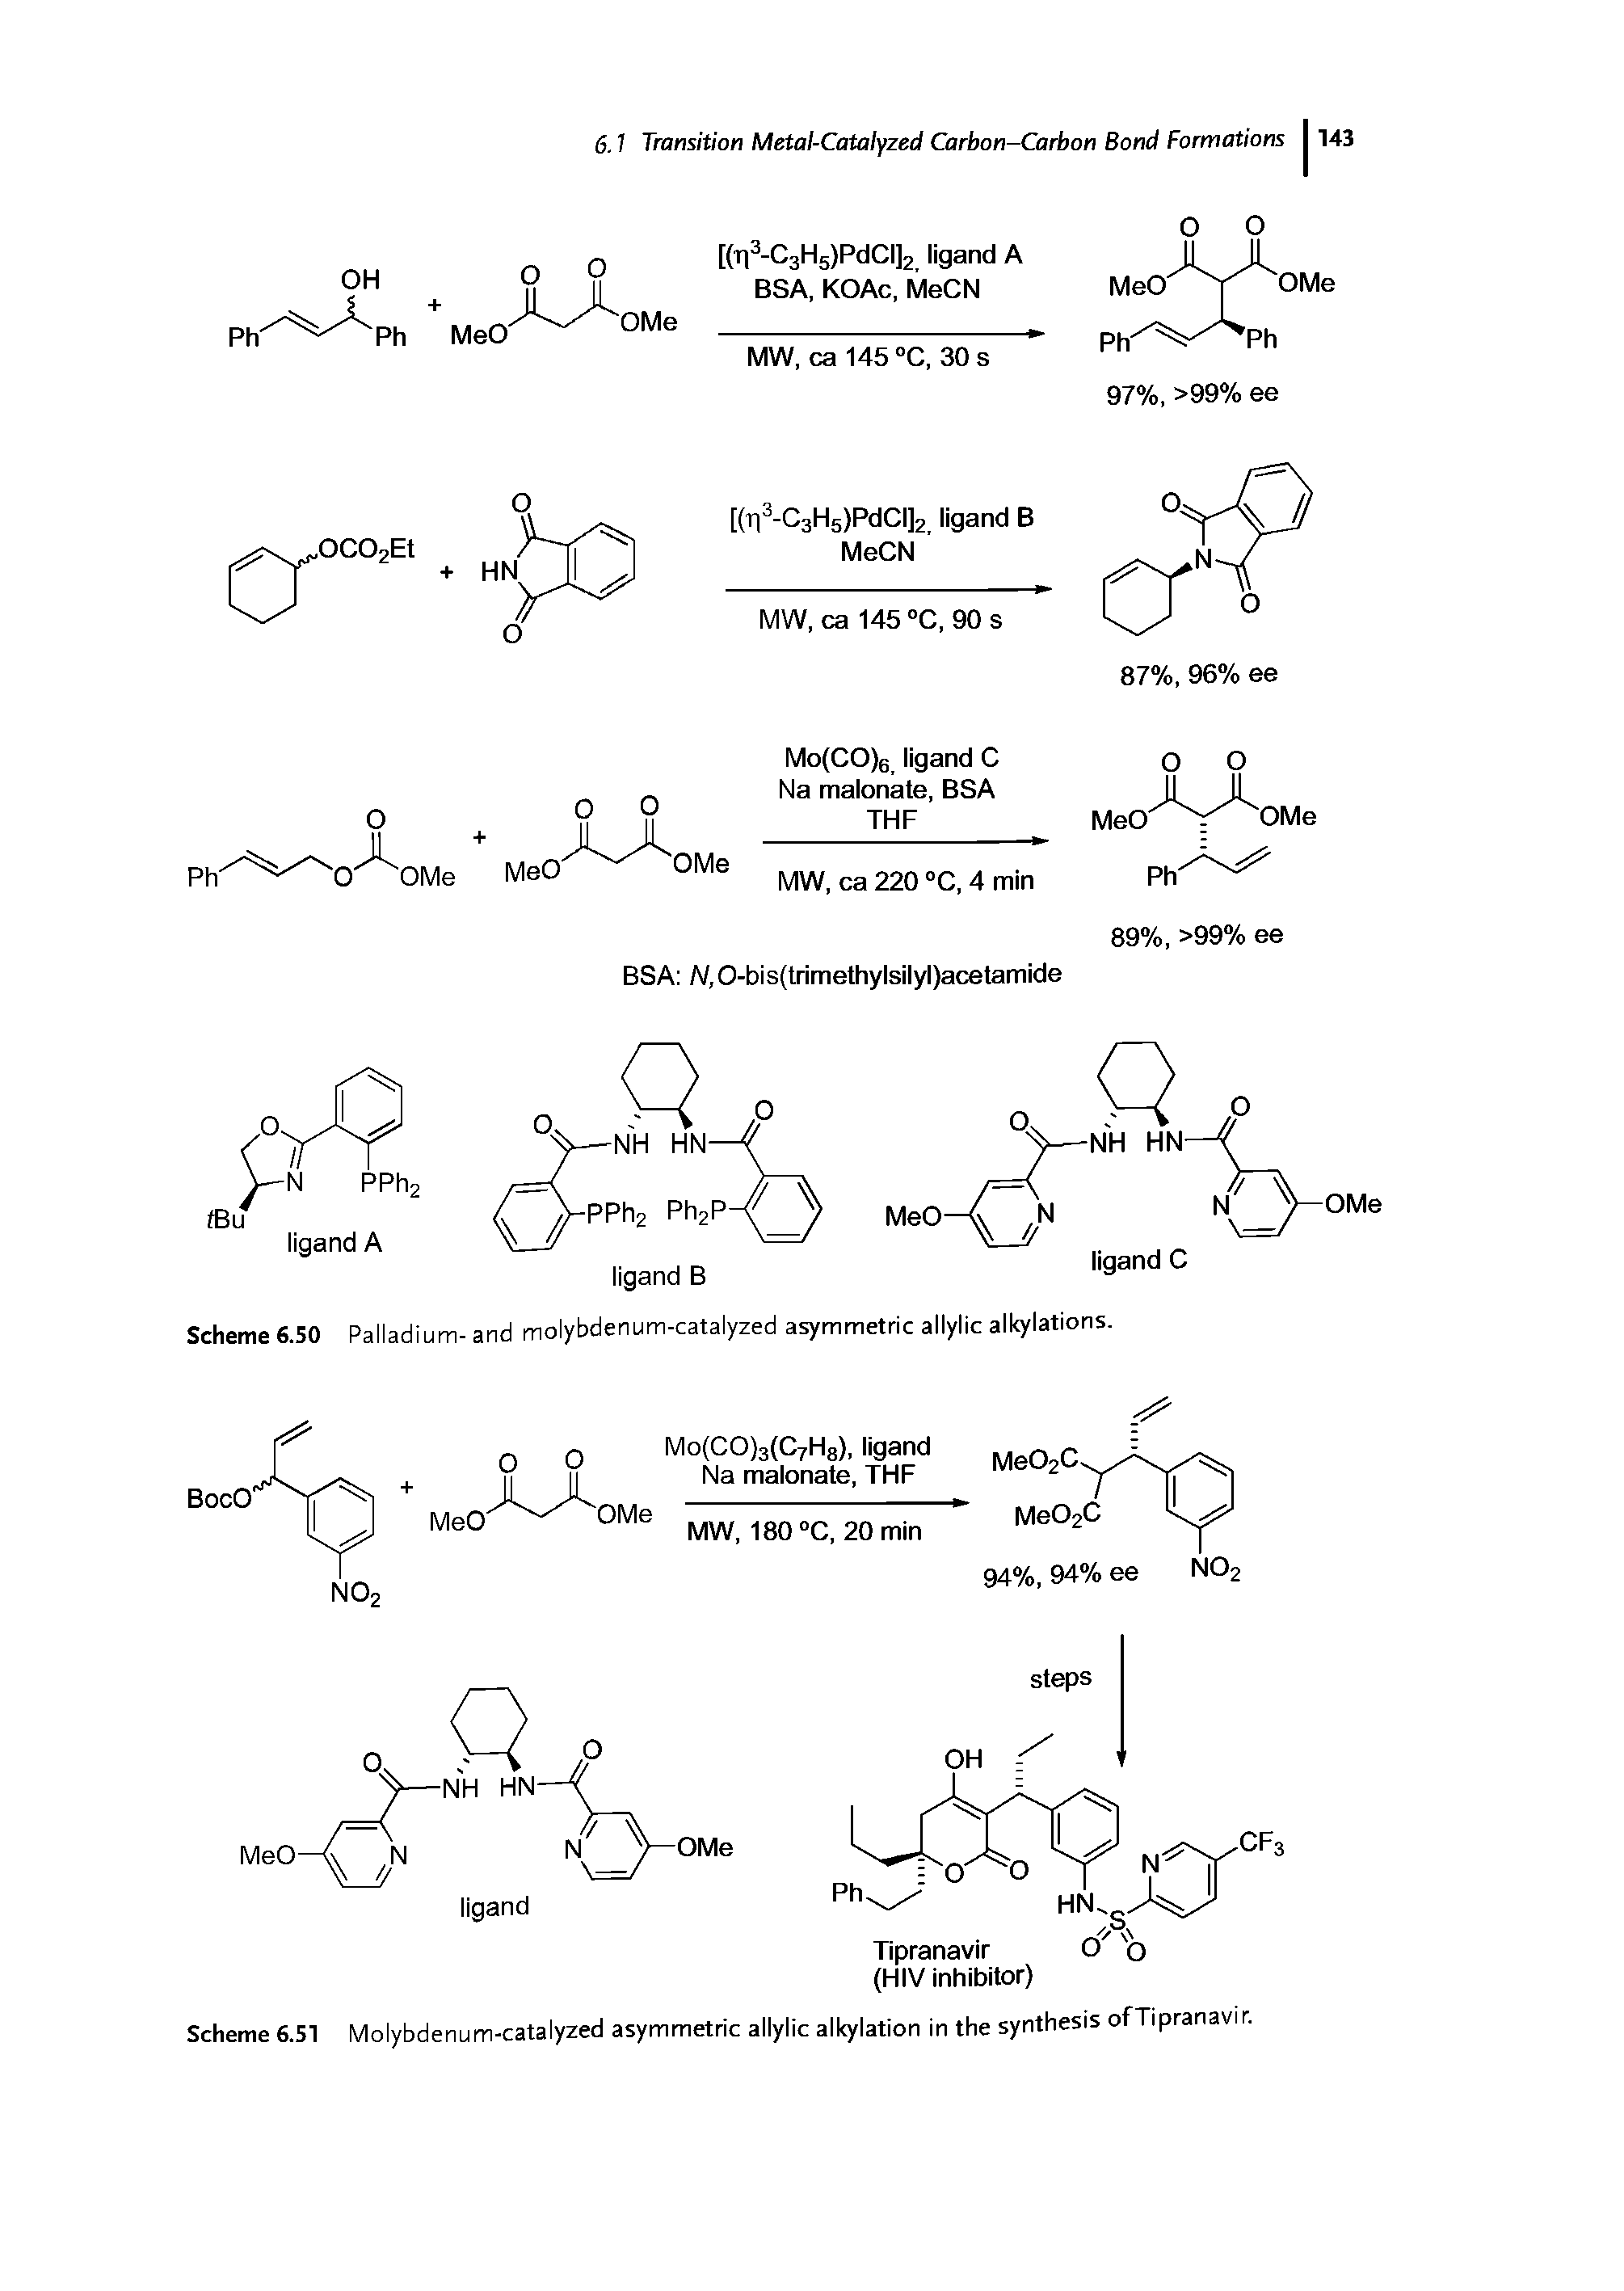 Scheme 6.50 Palladium- and molybdenum-catalyzed asymmetric allylic alkylations.